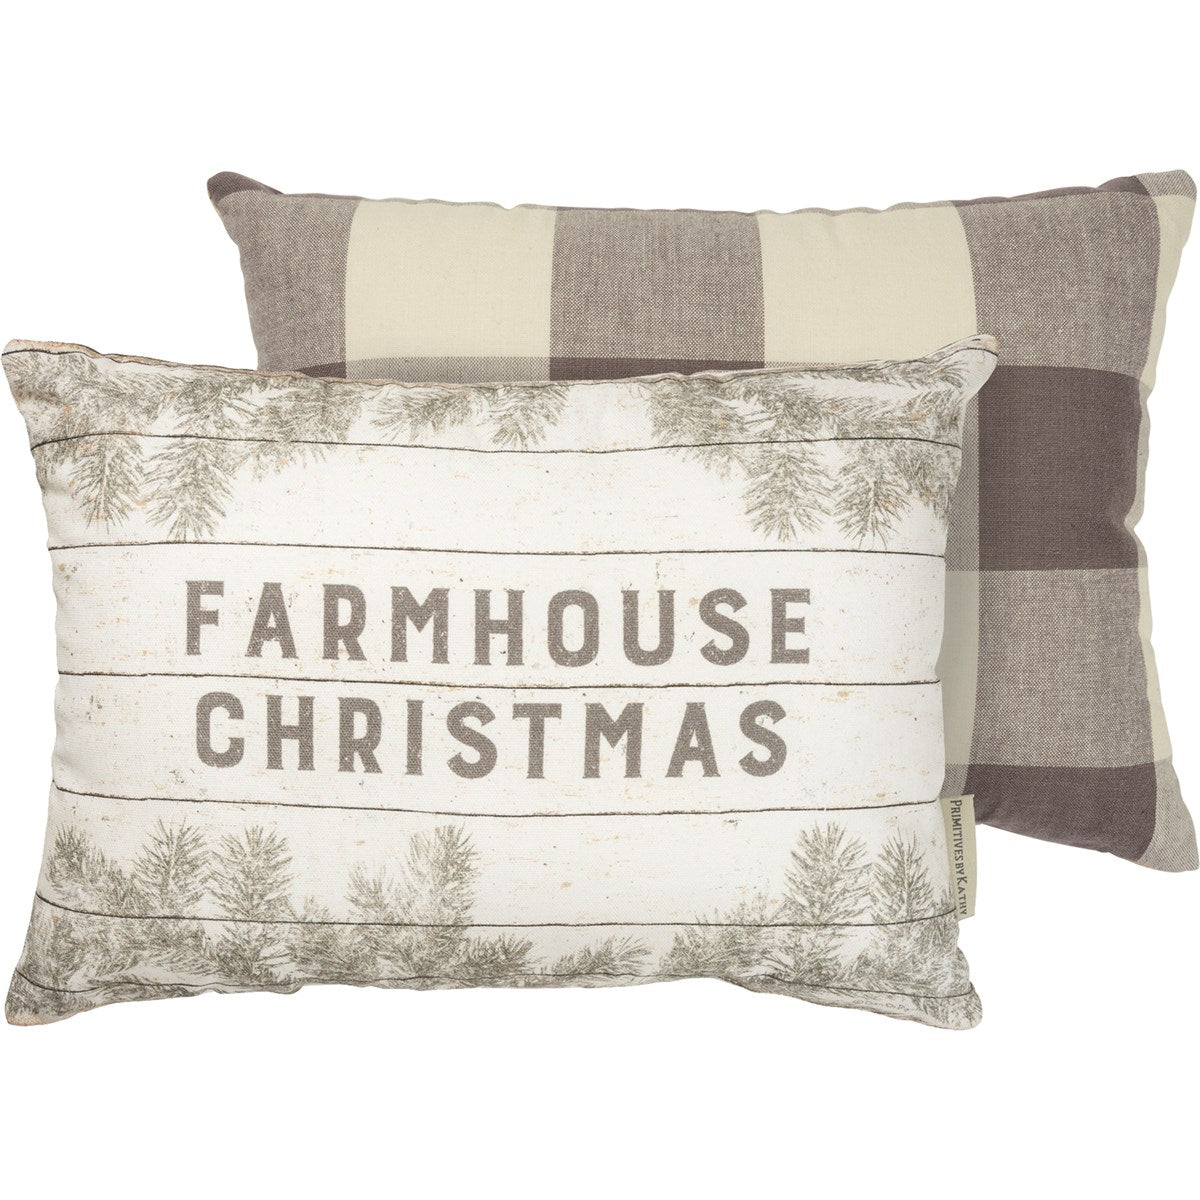 Farmhouse Christmas Pillow